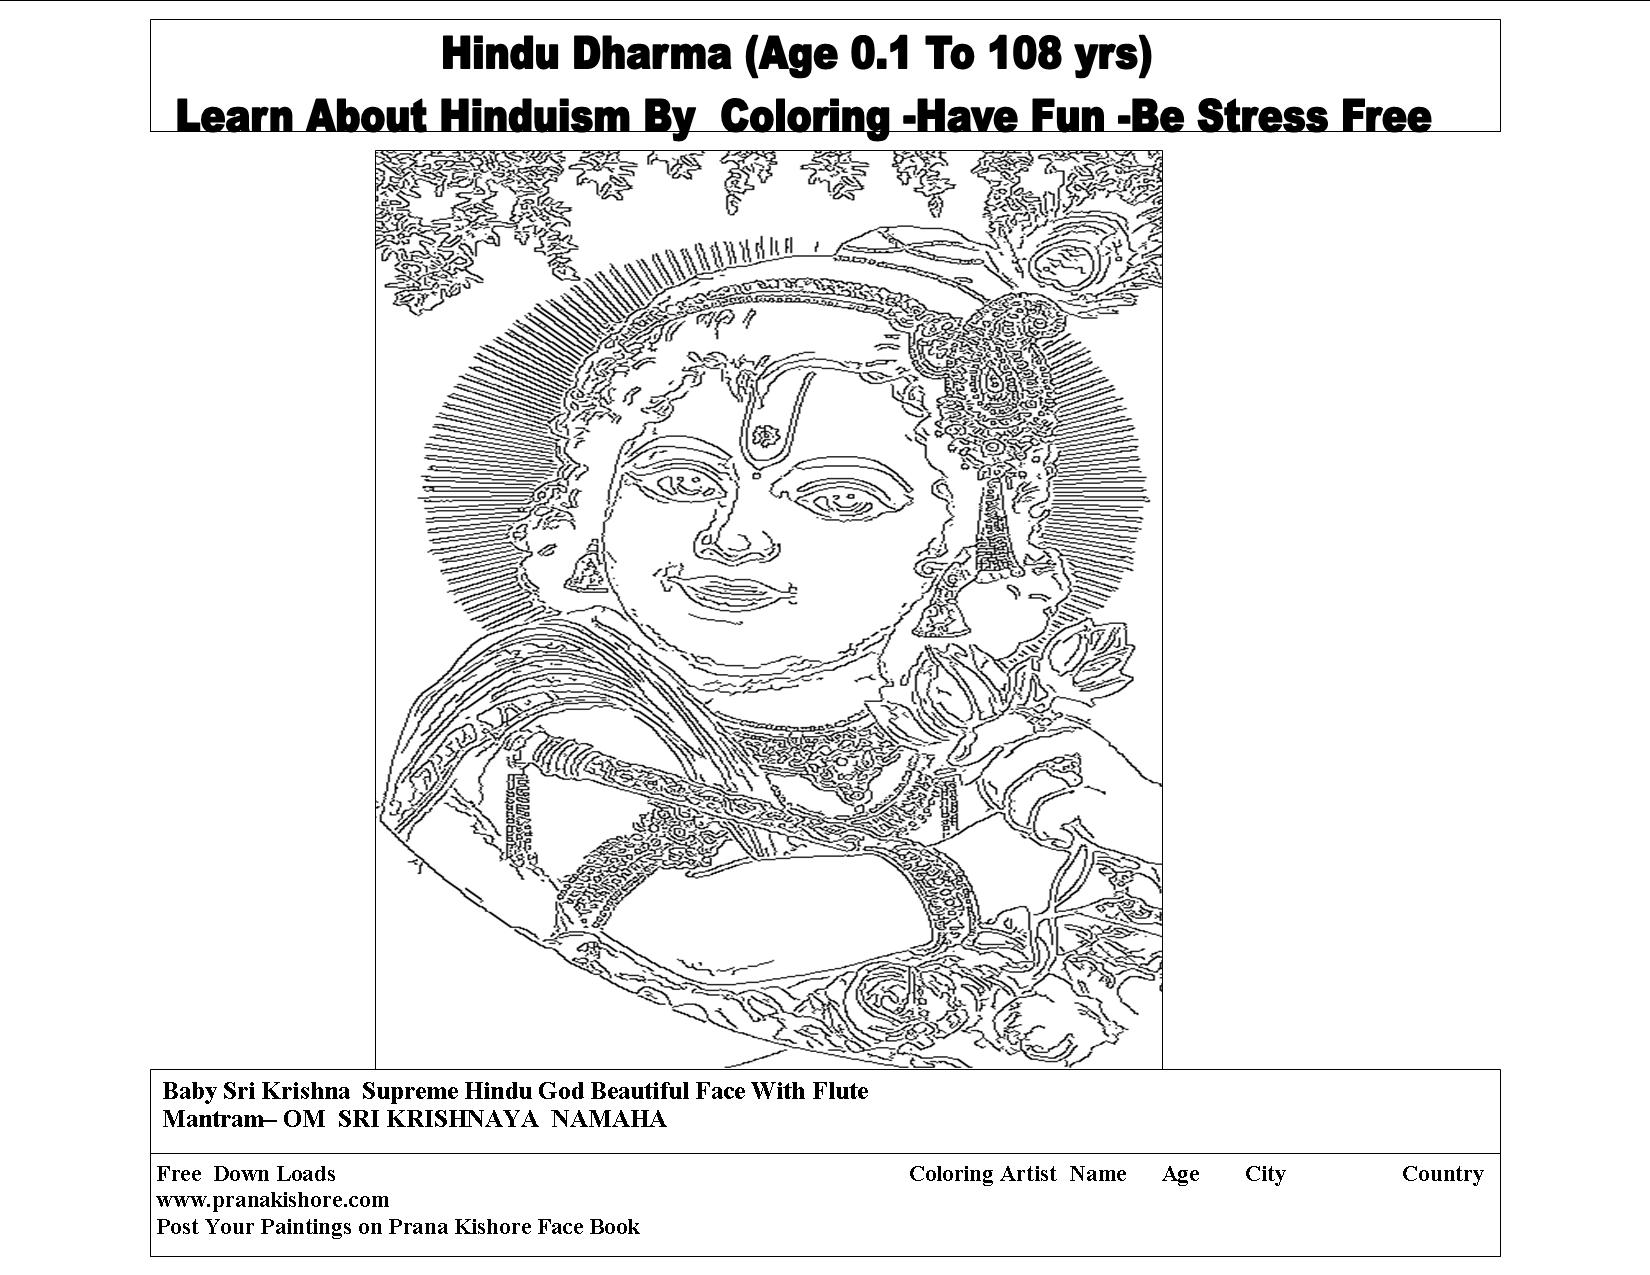 Hindu Dharma Coloring- Baby Sri Krishna With Flute